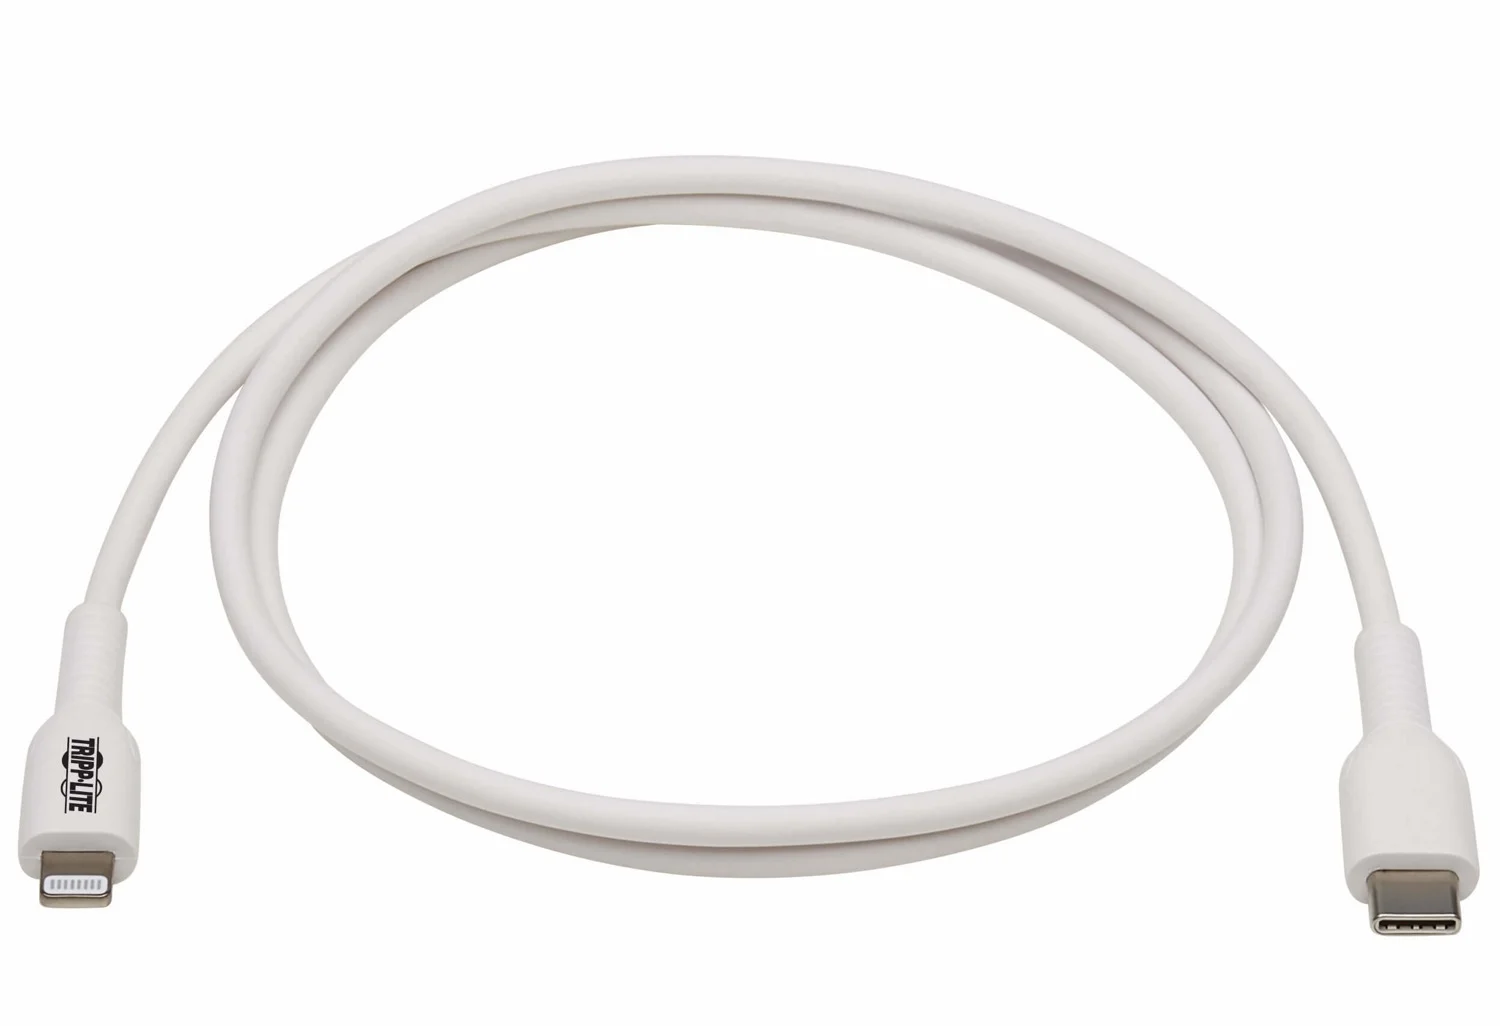 Cables Safe-IT de Tripp Lite son adecuados para dispositivos de Apple